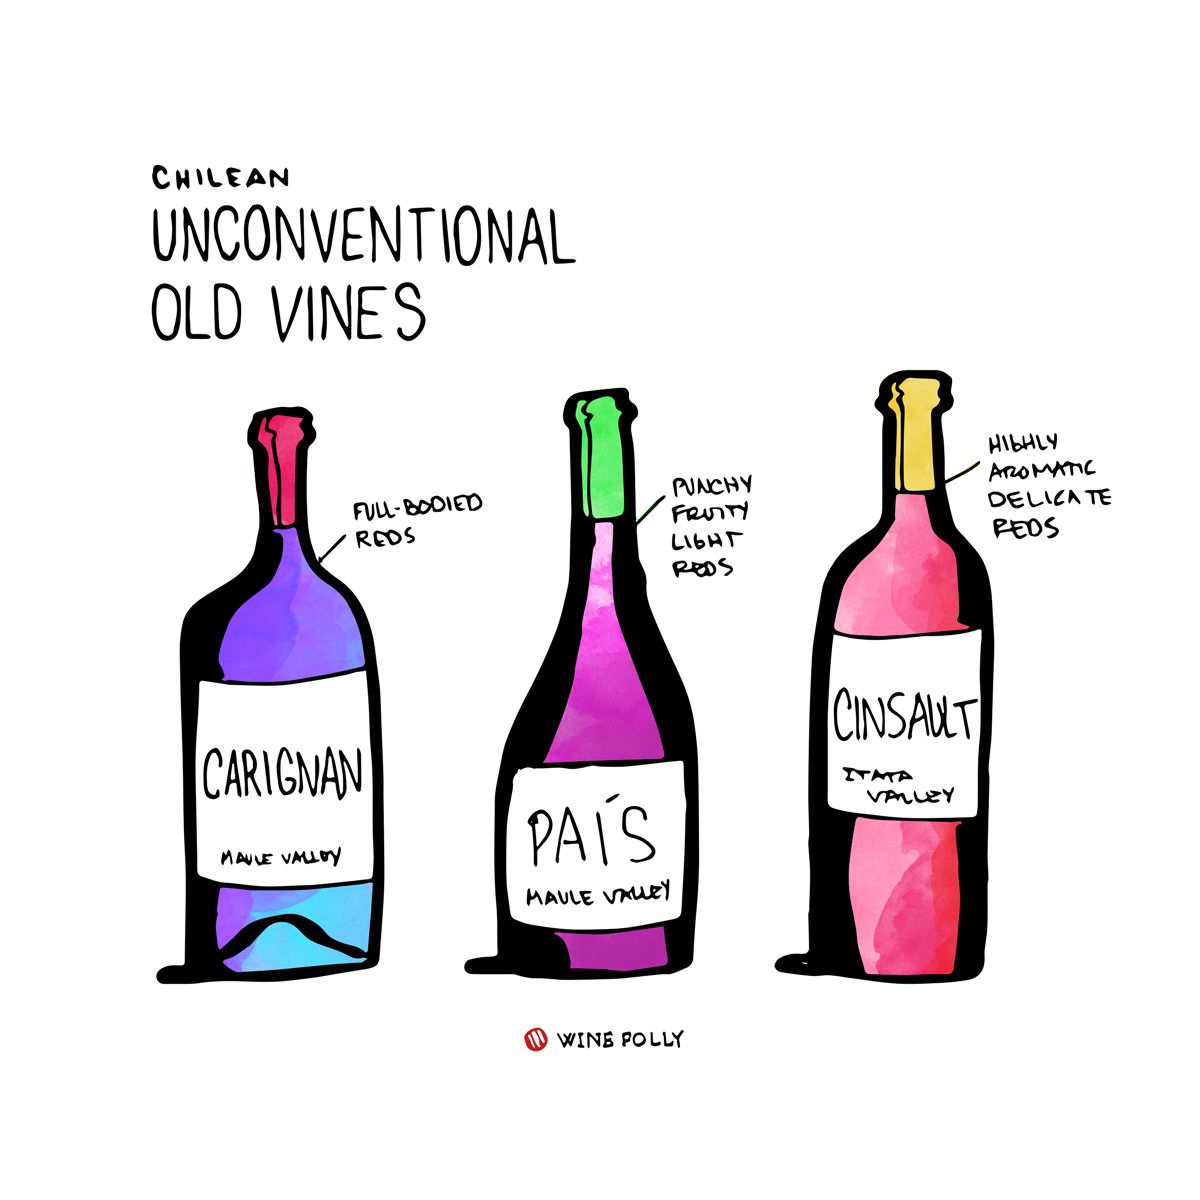 pais-carginan-cinsault-chile-wine-folly